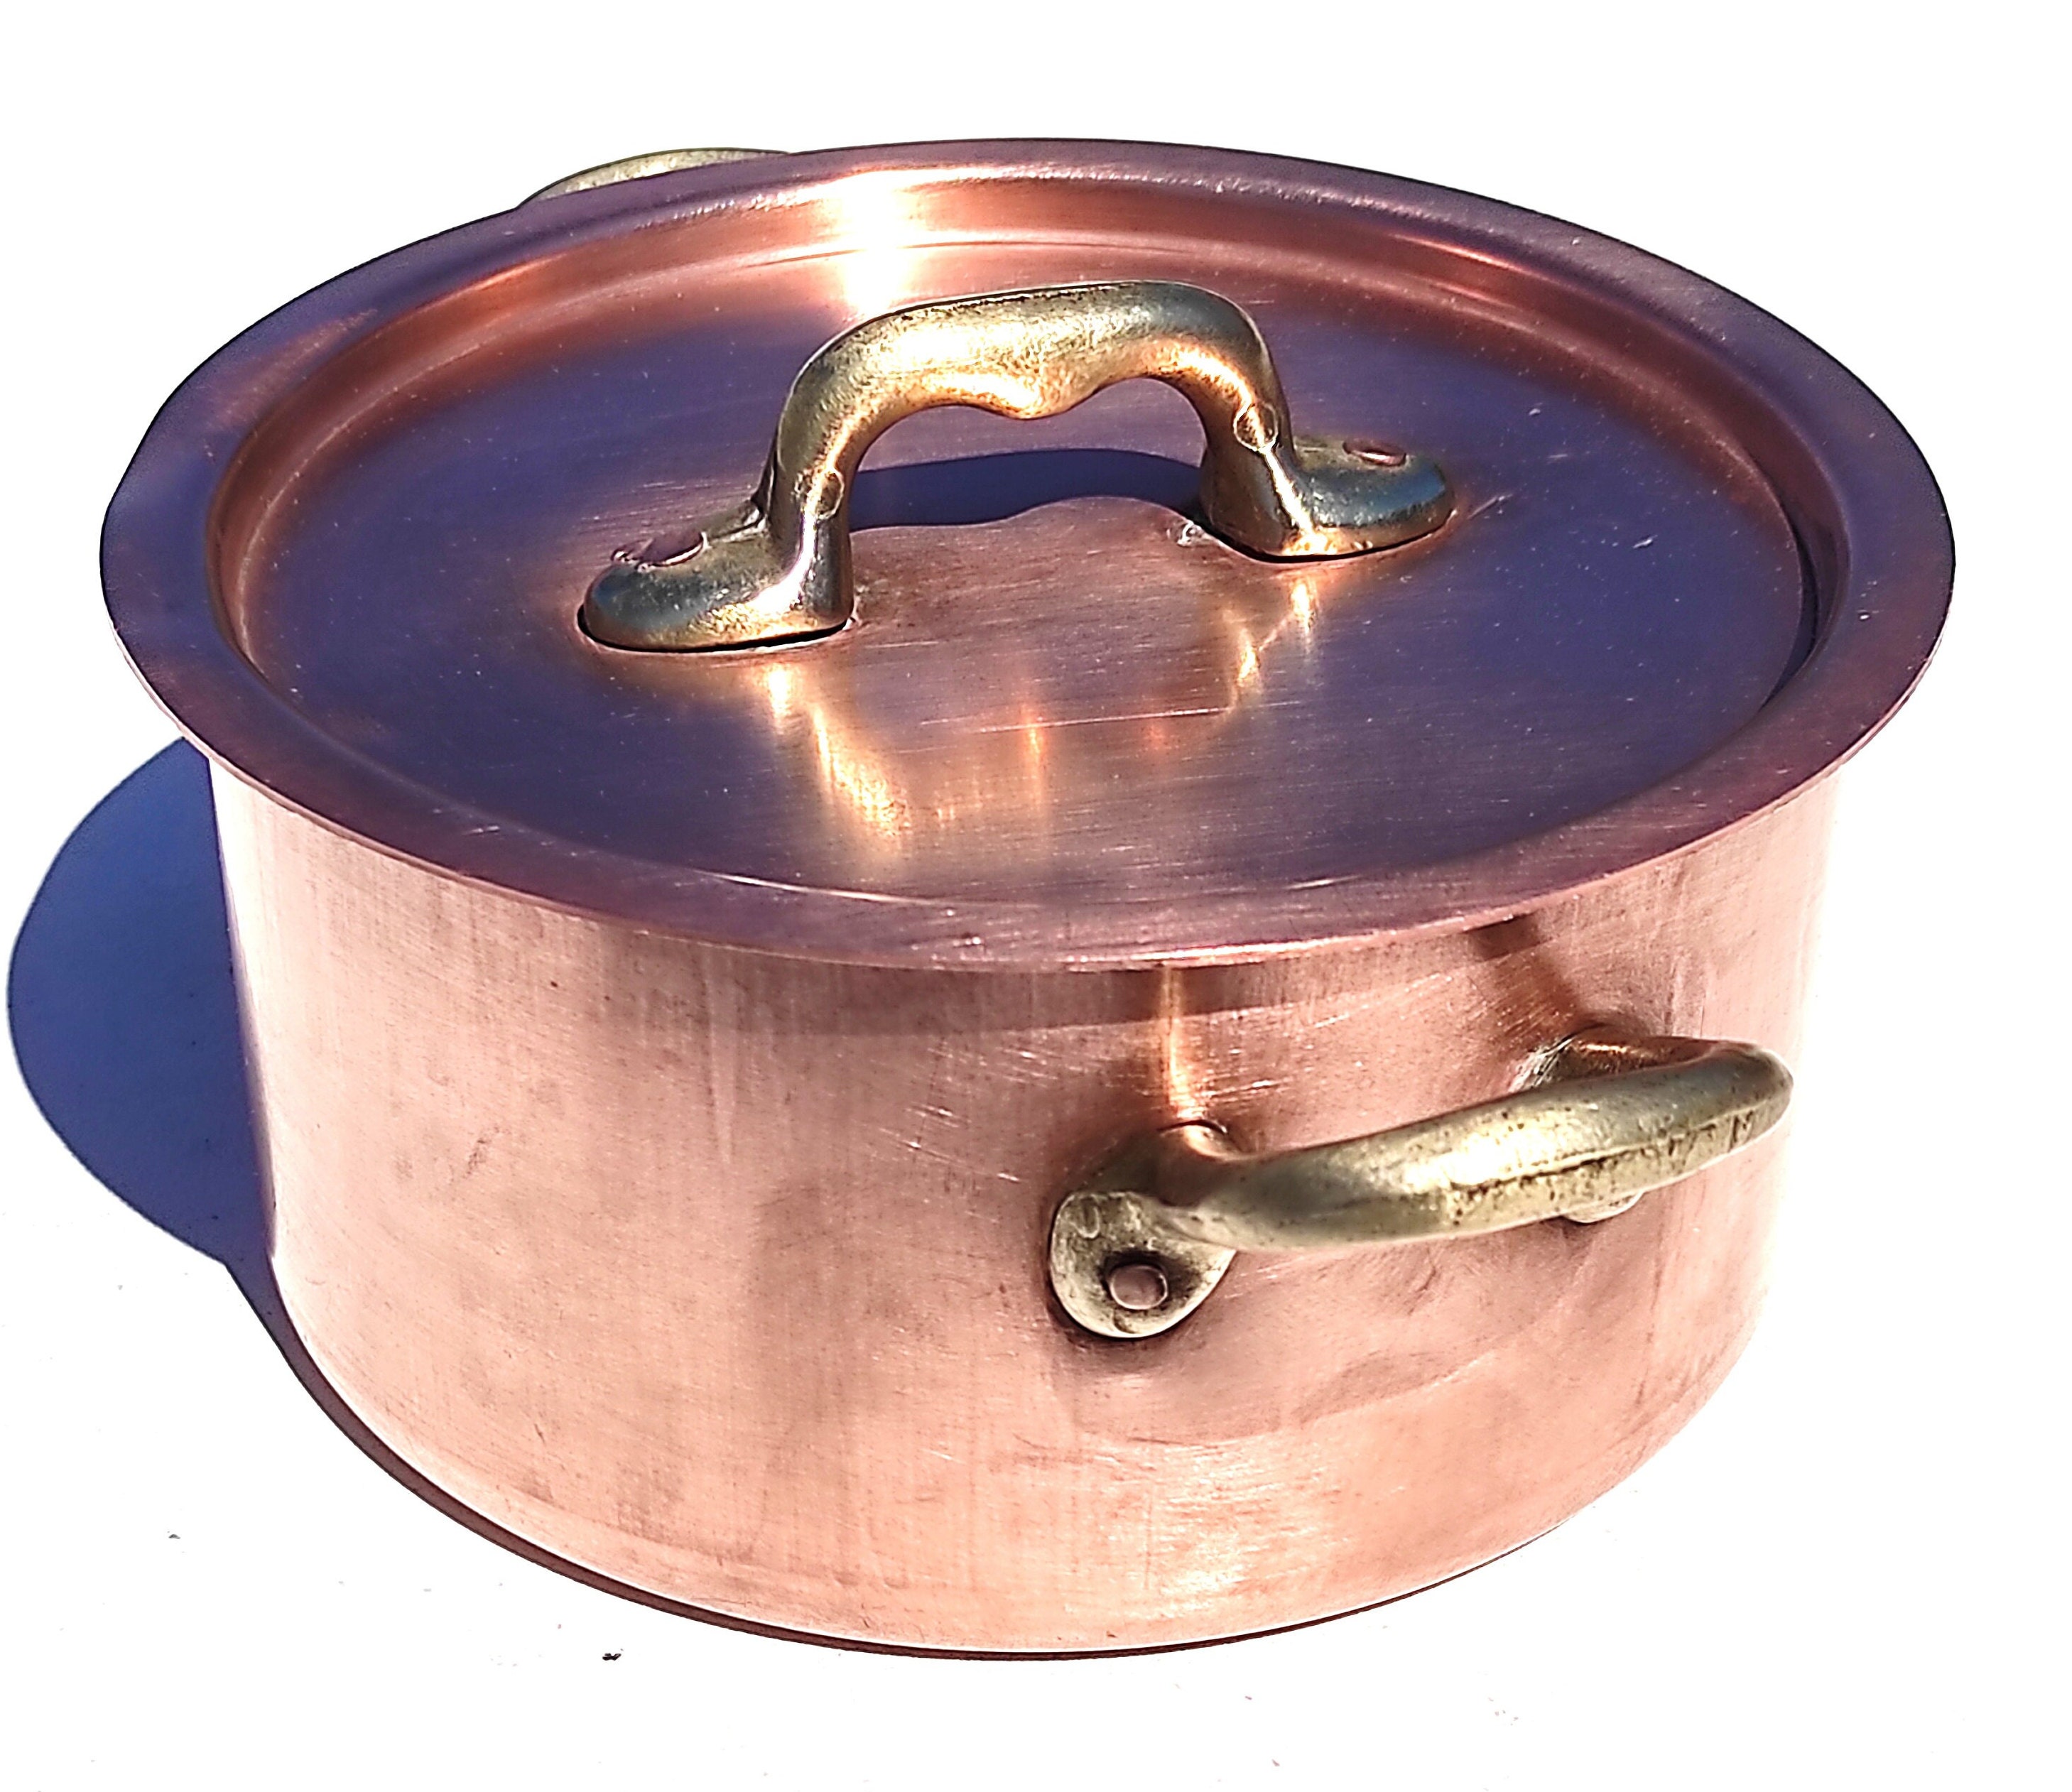 The 3 Quart Saucepan – Brooklyn Copper Cookware